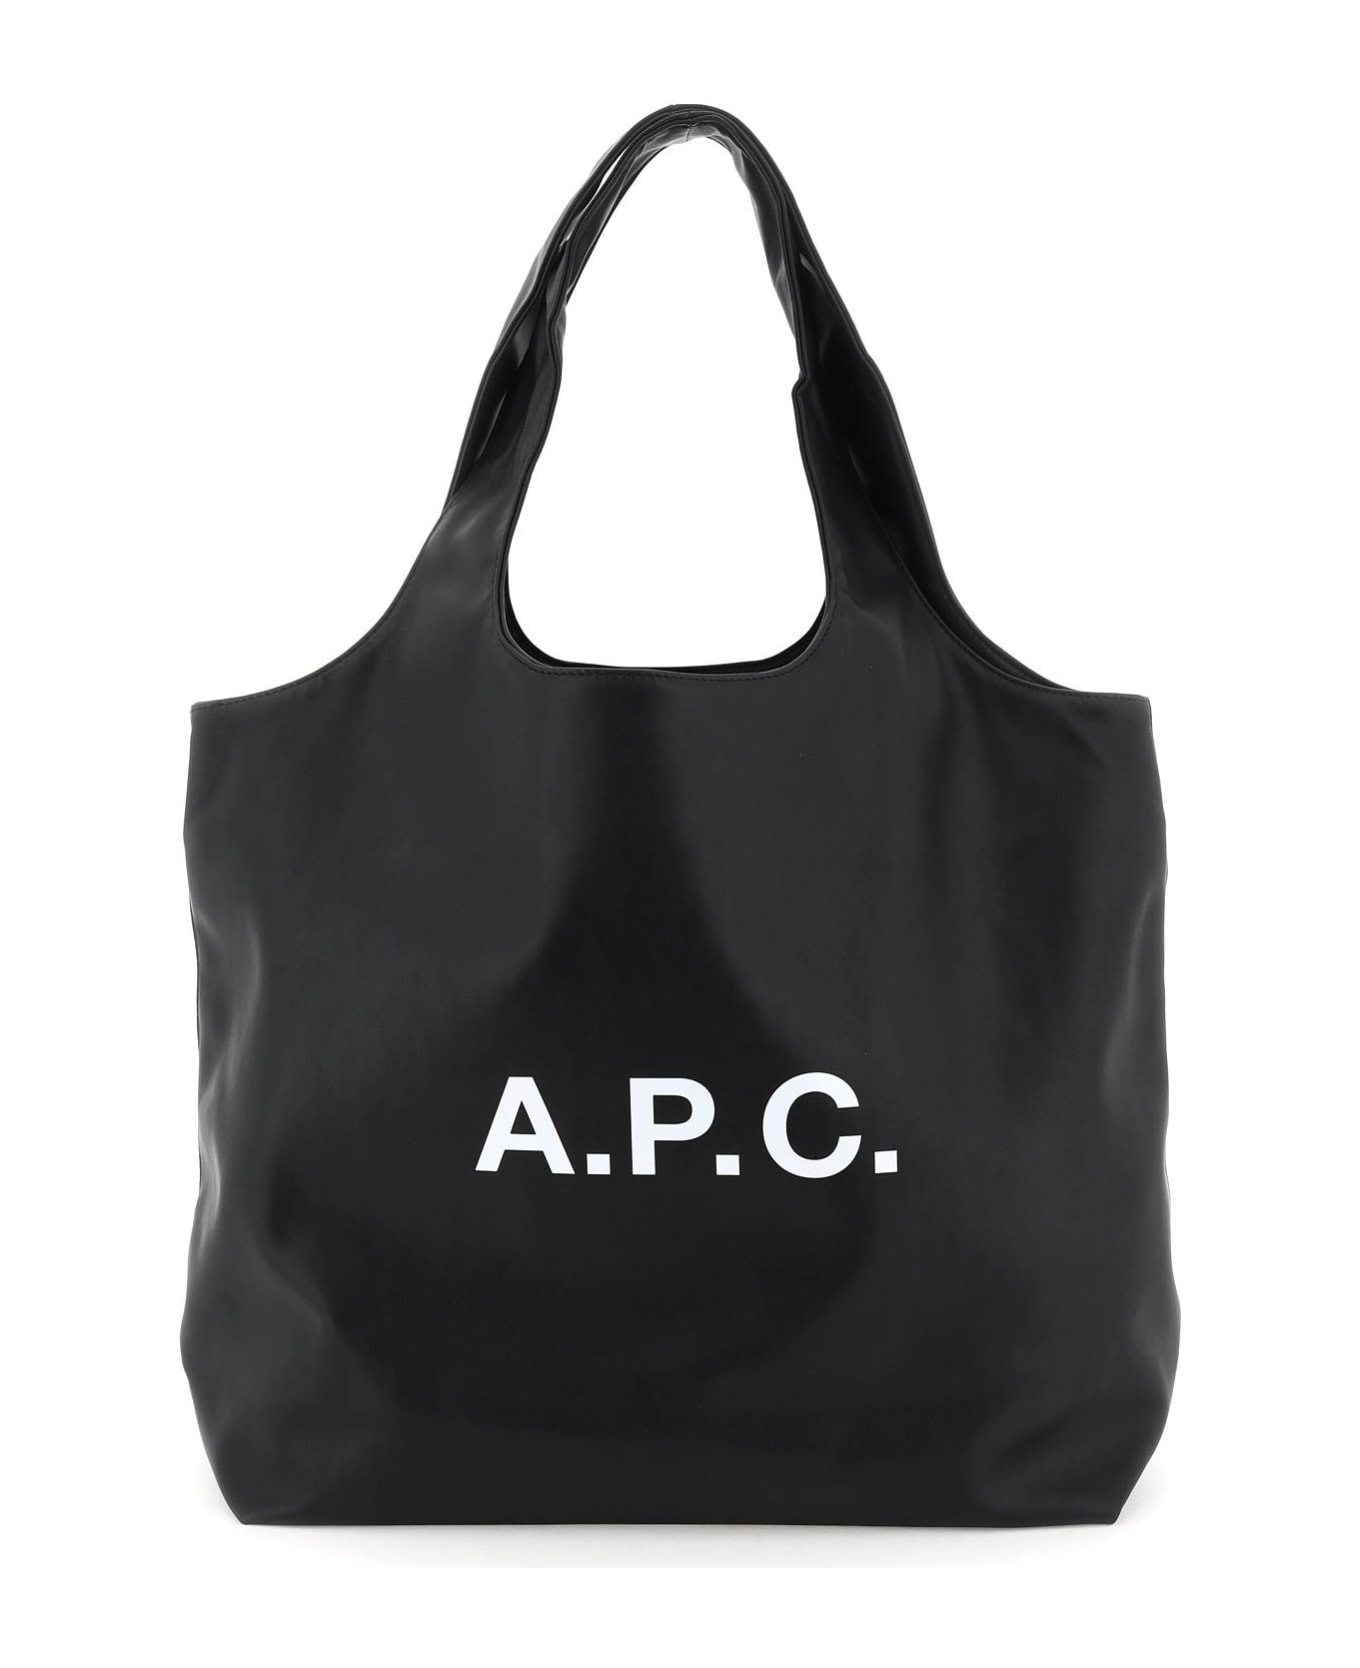 A.P.C. Ninon Tote Bag - Black